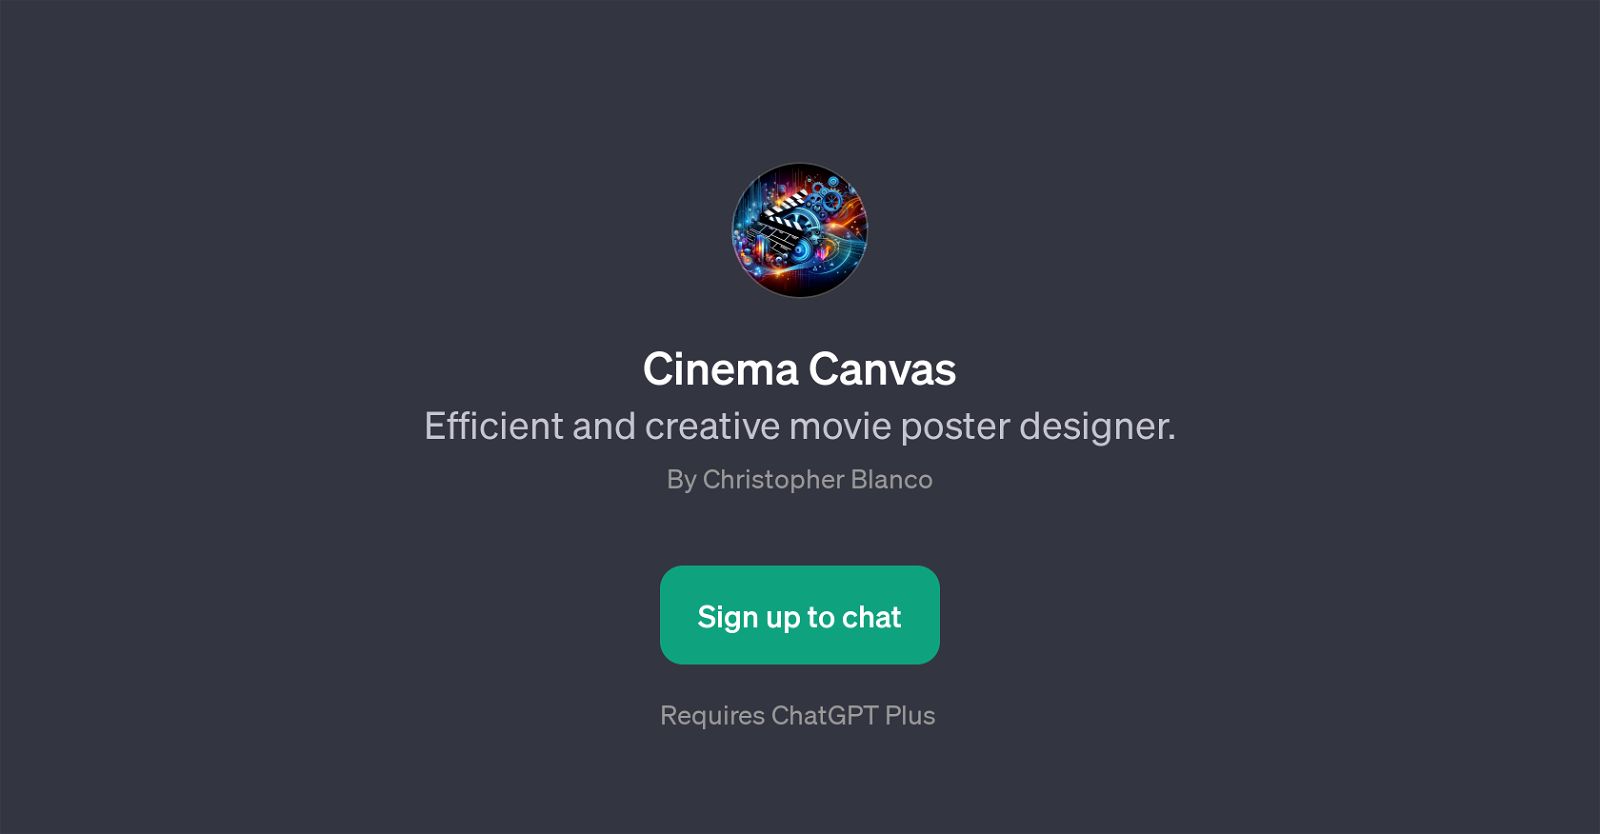 Cinema Canvas website